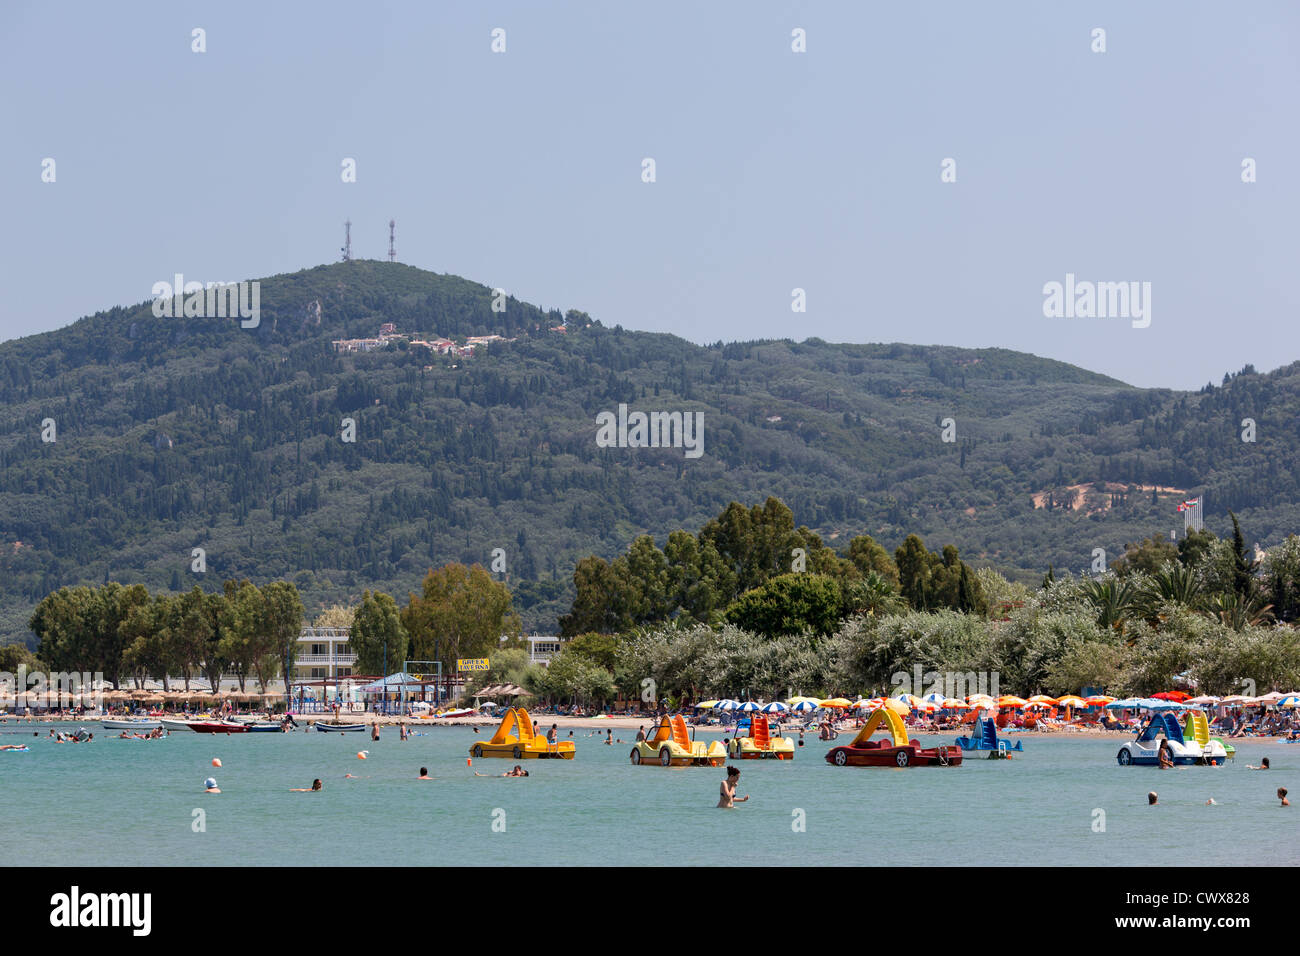 Colorful plastic paddle boats rental in Moraitika, Corfu, Ionian Islands, Greece. Stock Photo